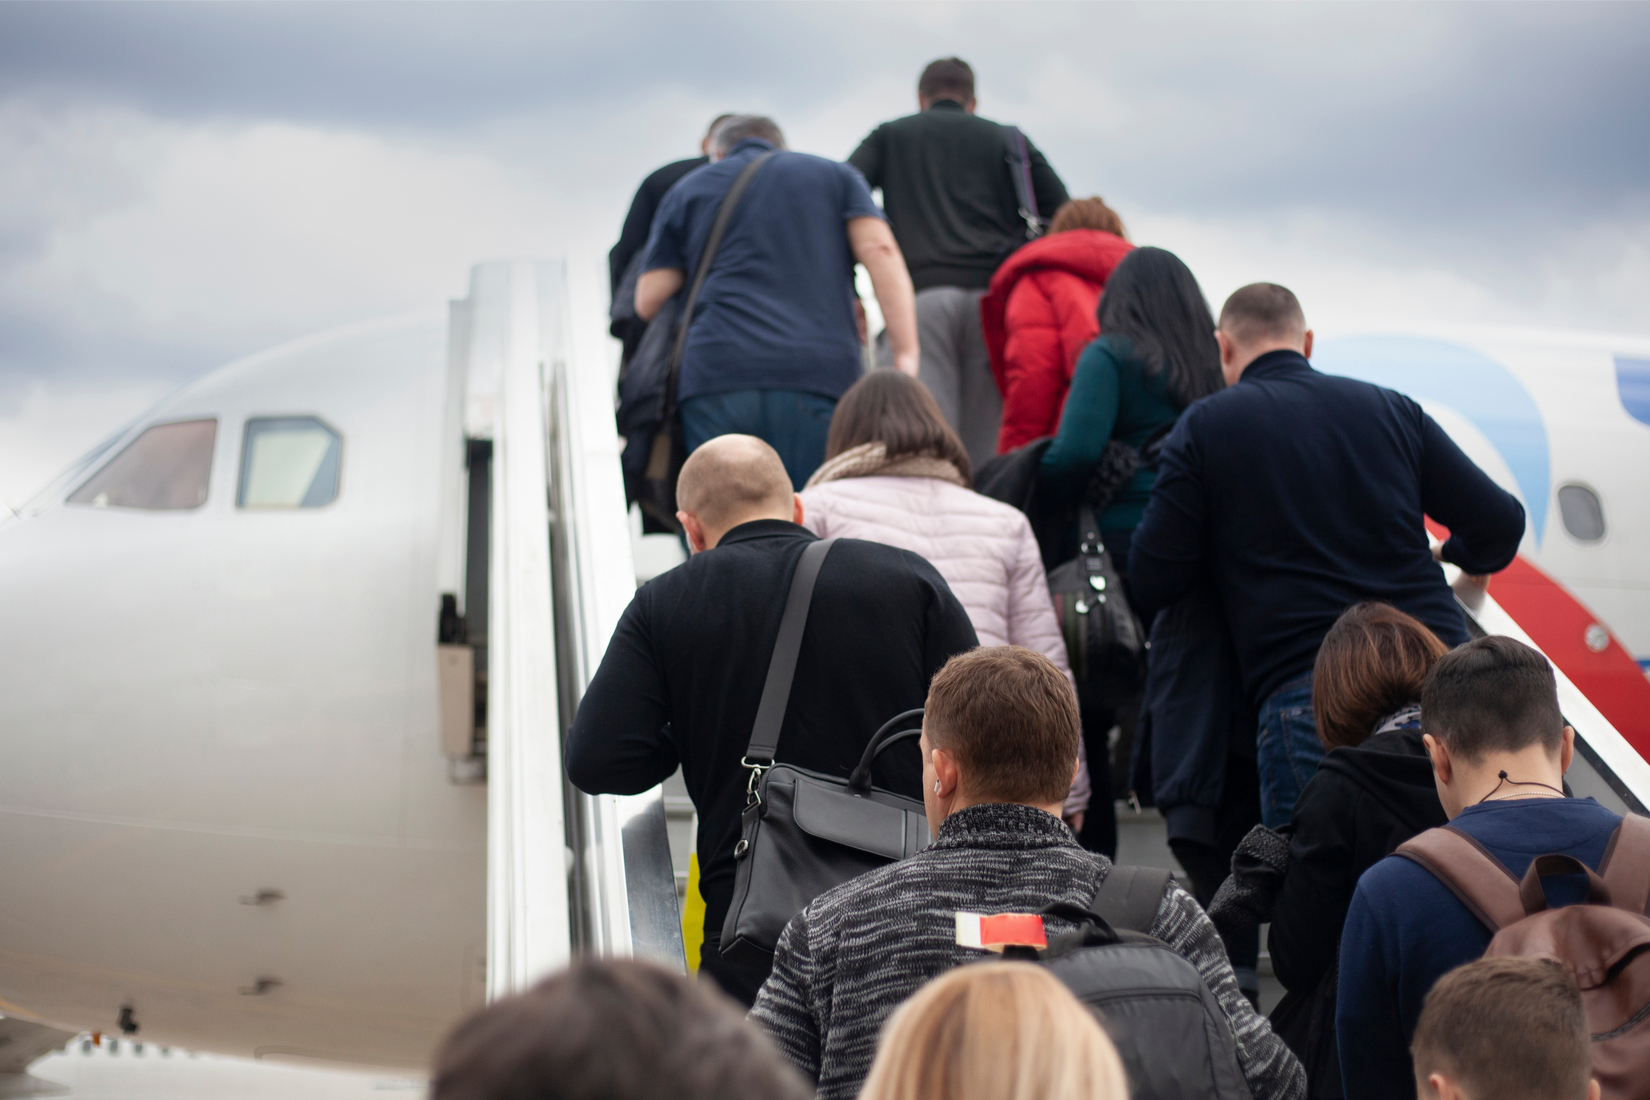 Travelers boarding a plane.